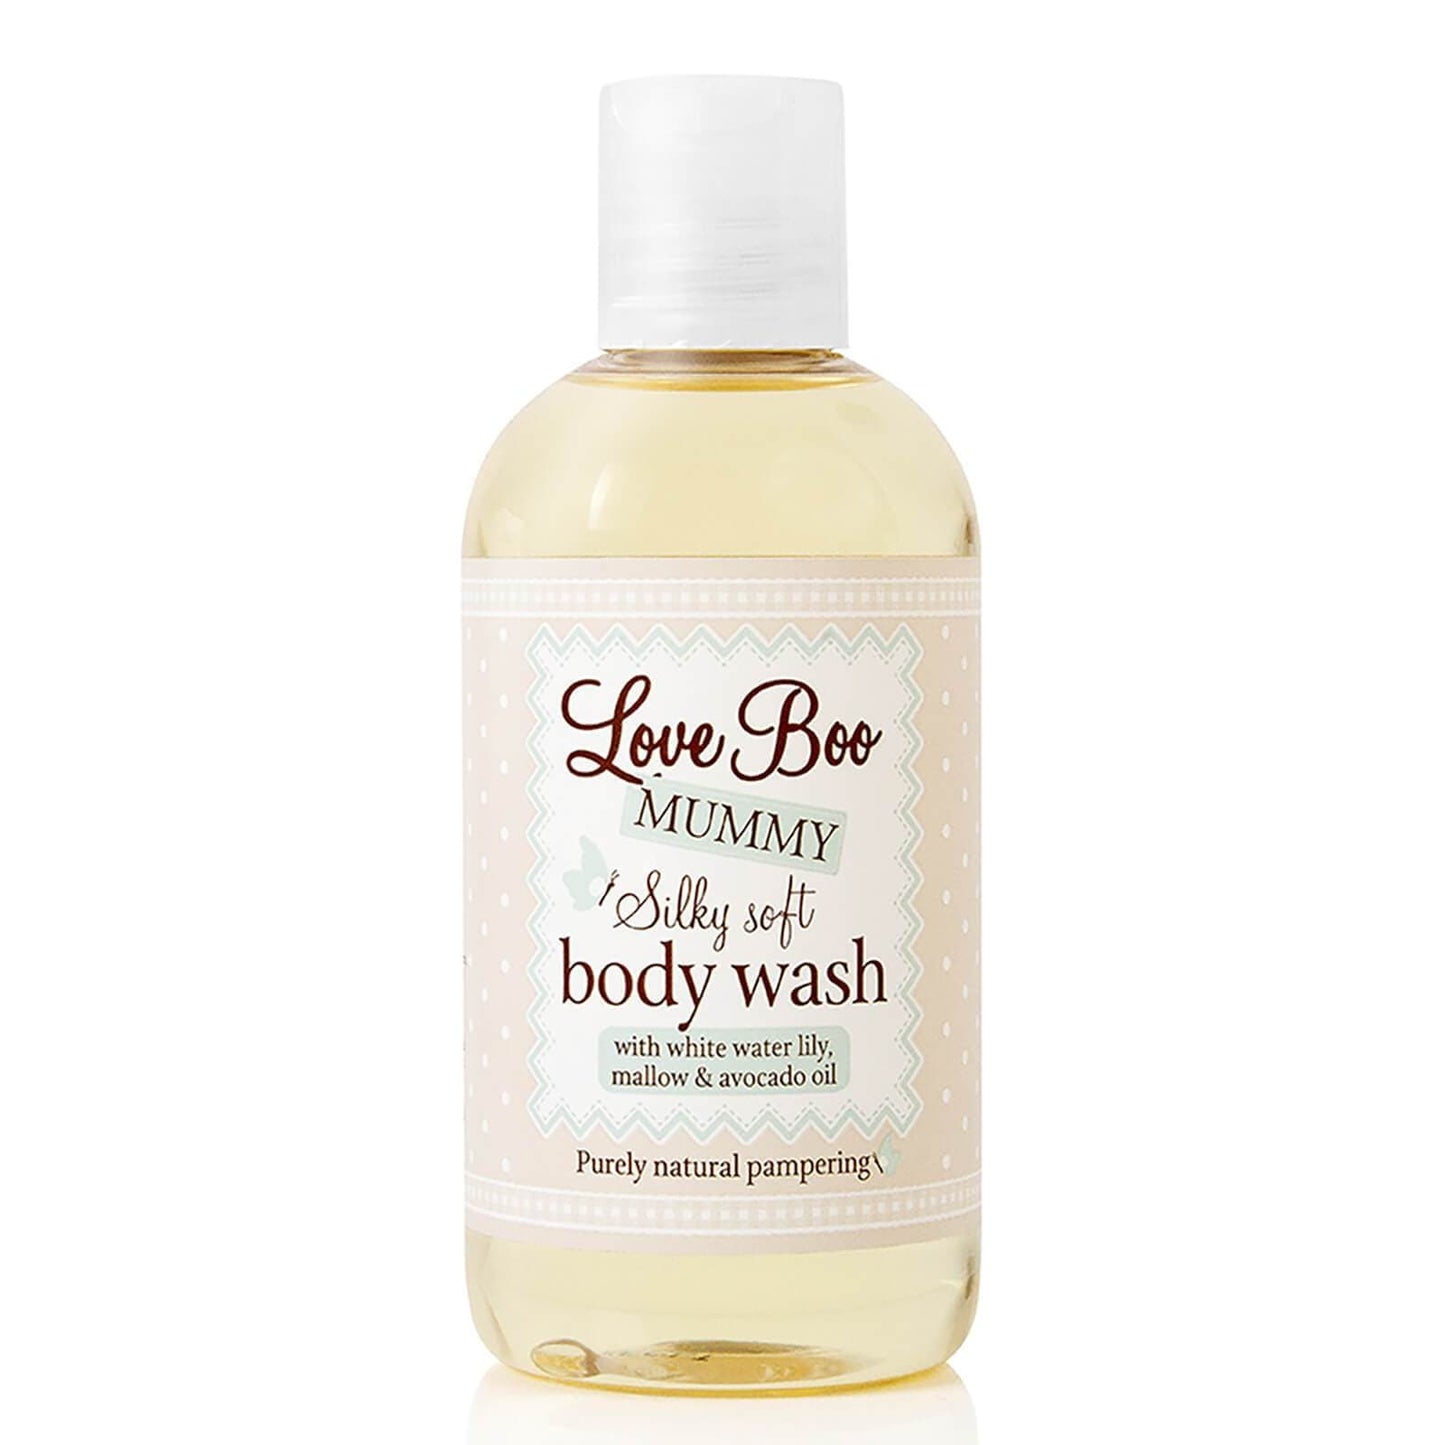 Love Boo - Mummy - Shower gel for women - 250ml - Love Boo - Ethni Beauty Market